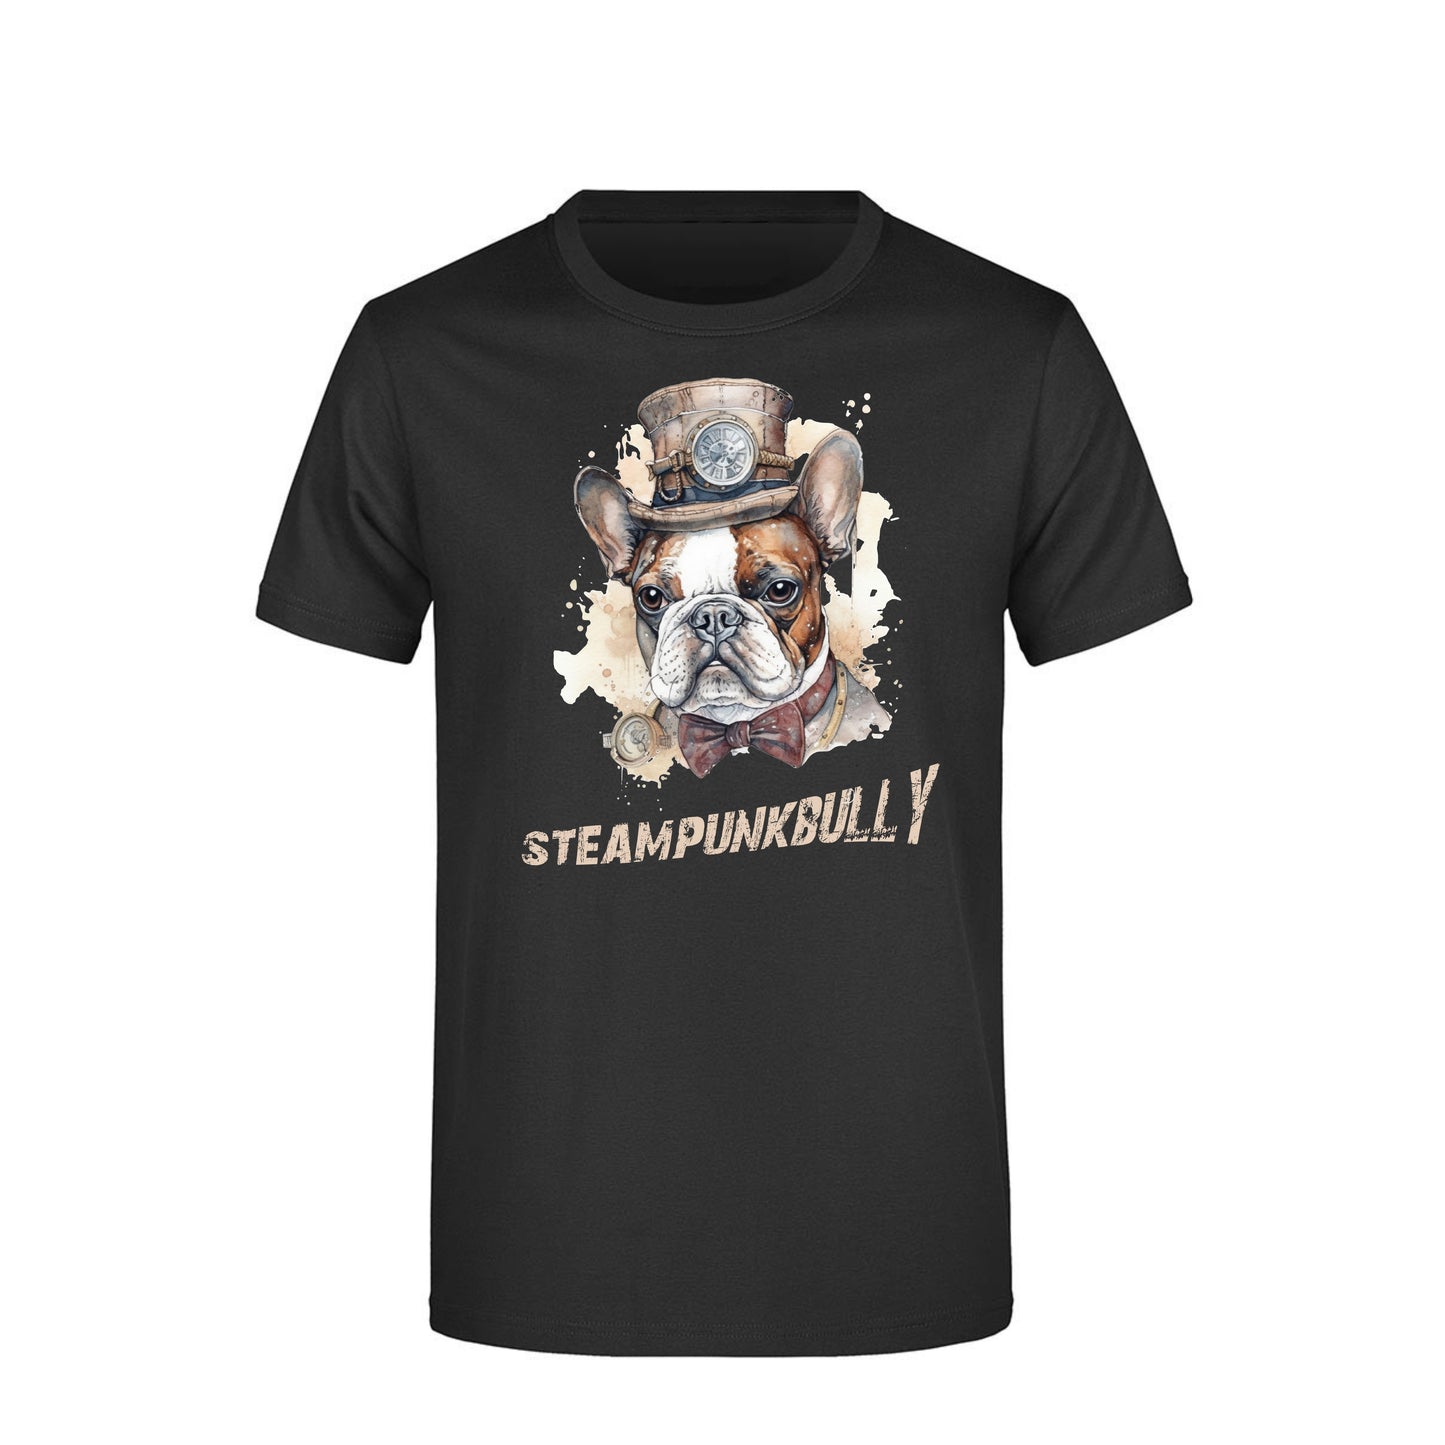 Steampunkbully Shirt Tyson